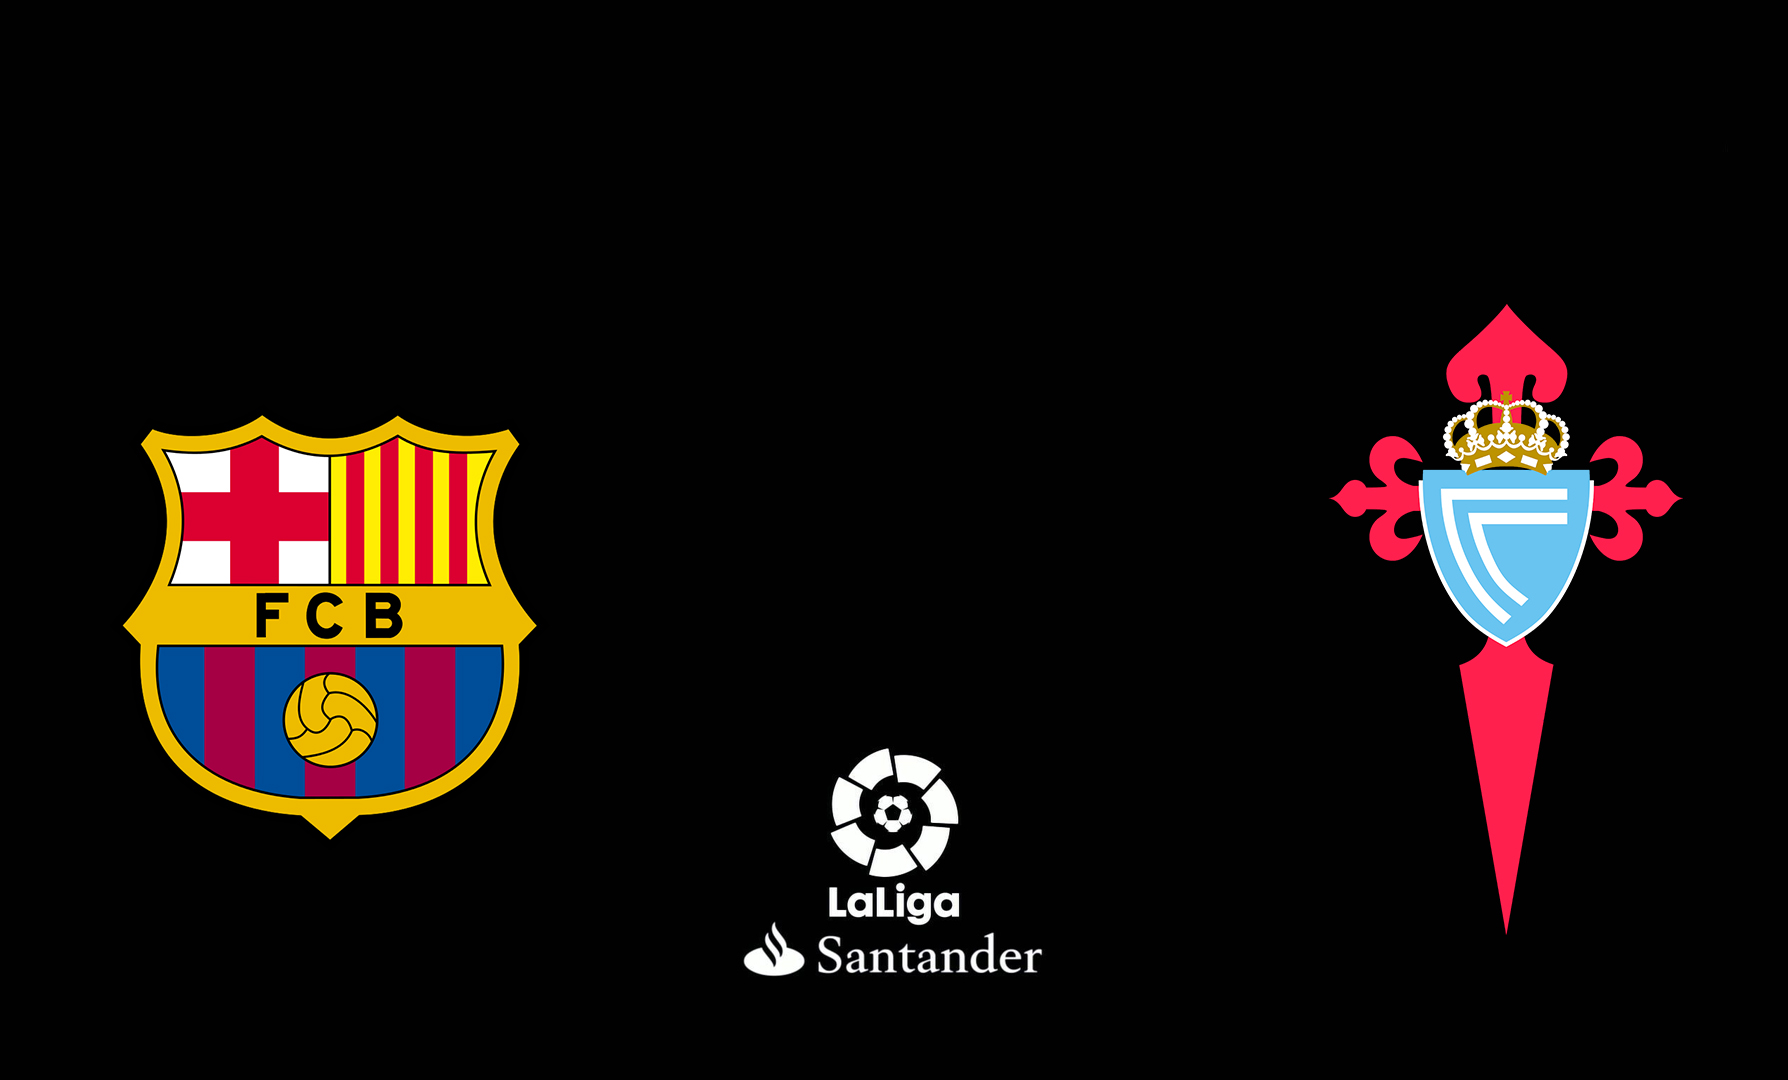 soi-keo-ca-cuoc-bong-da-ngay-7-11-Barcelona-vs-club-brugge-lay-ve-di-tiep-b9 1